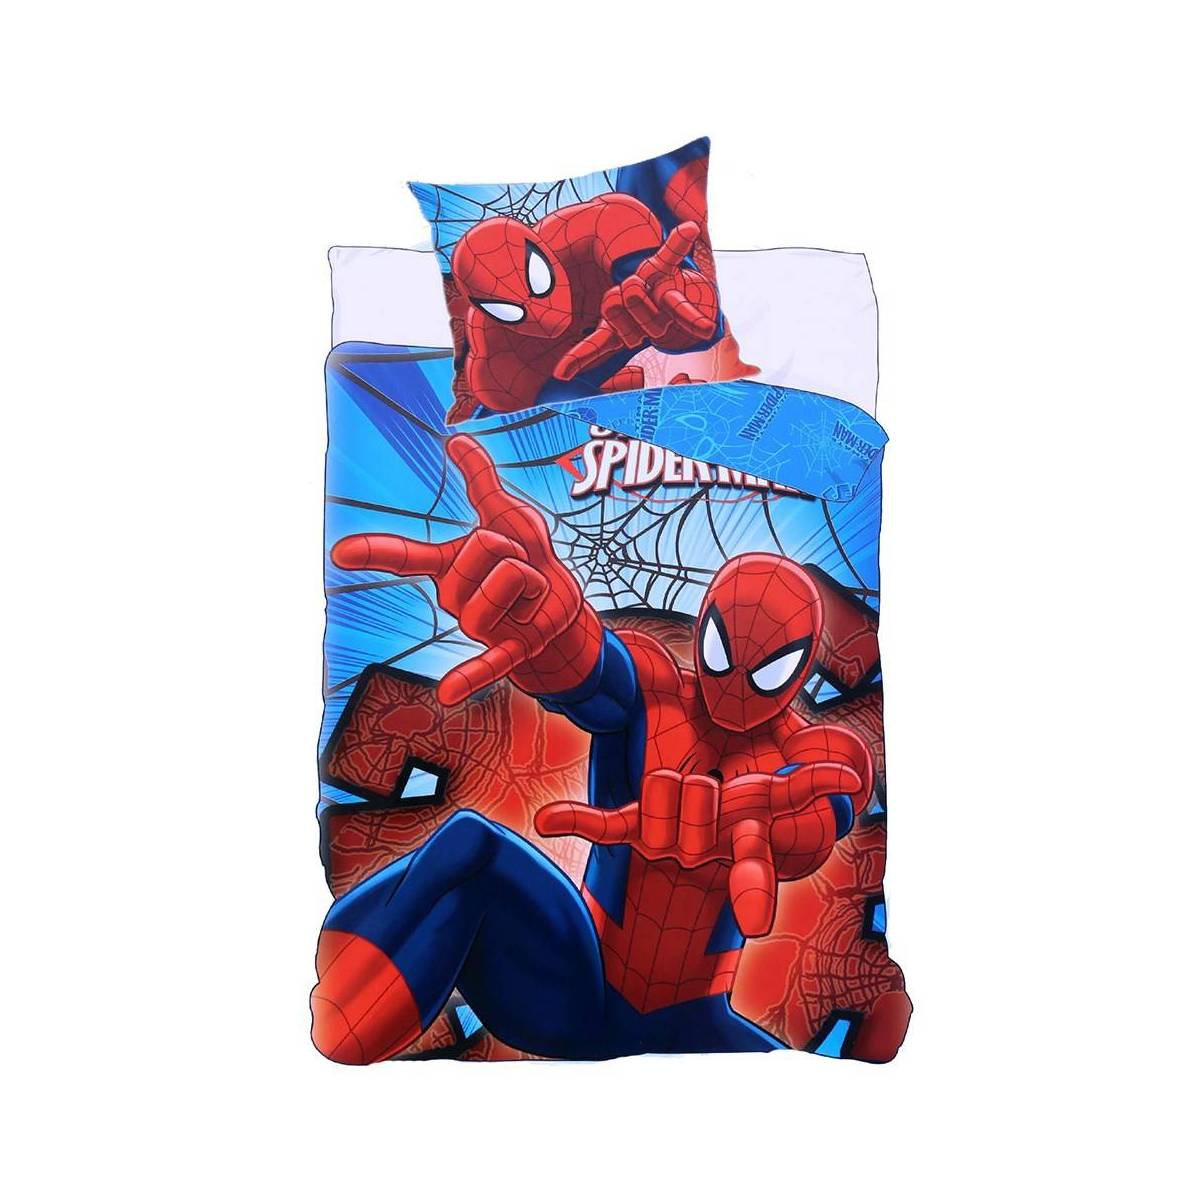 Spider-Man - Kinderbettbezug + Kissenbezug 155 x 200 cm